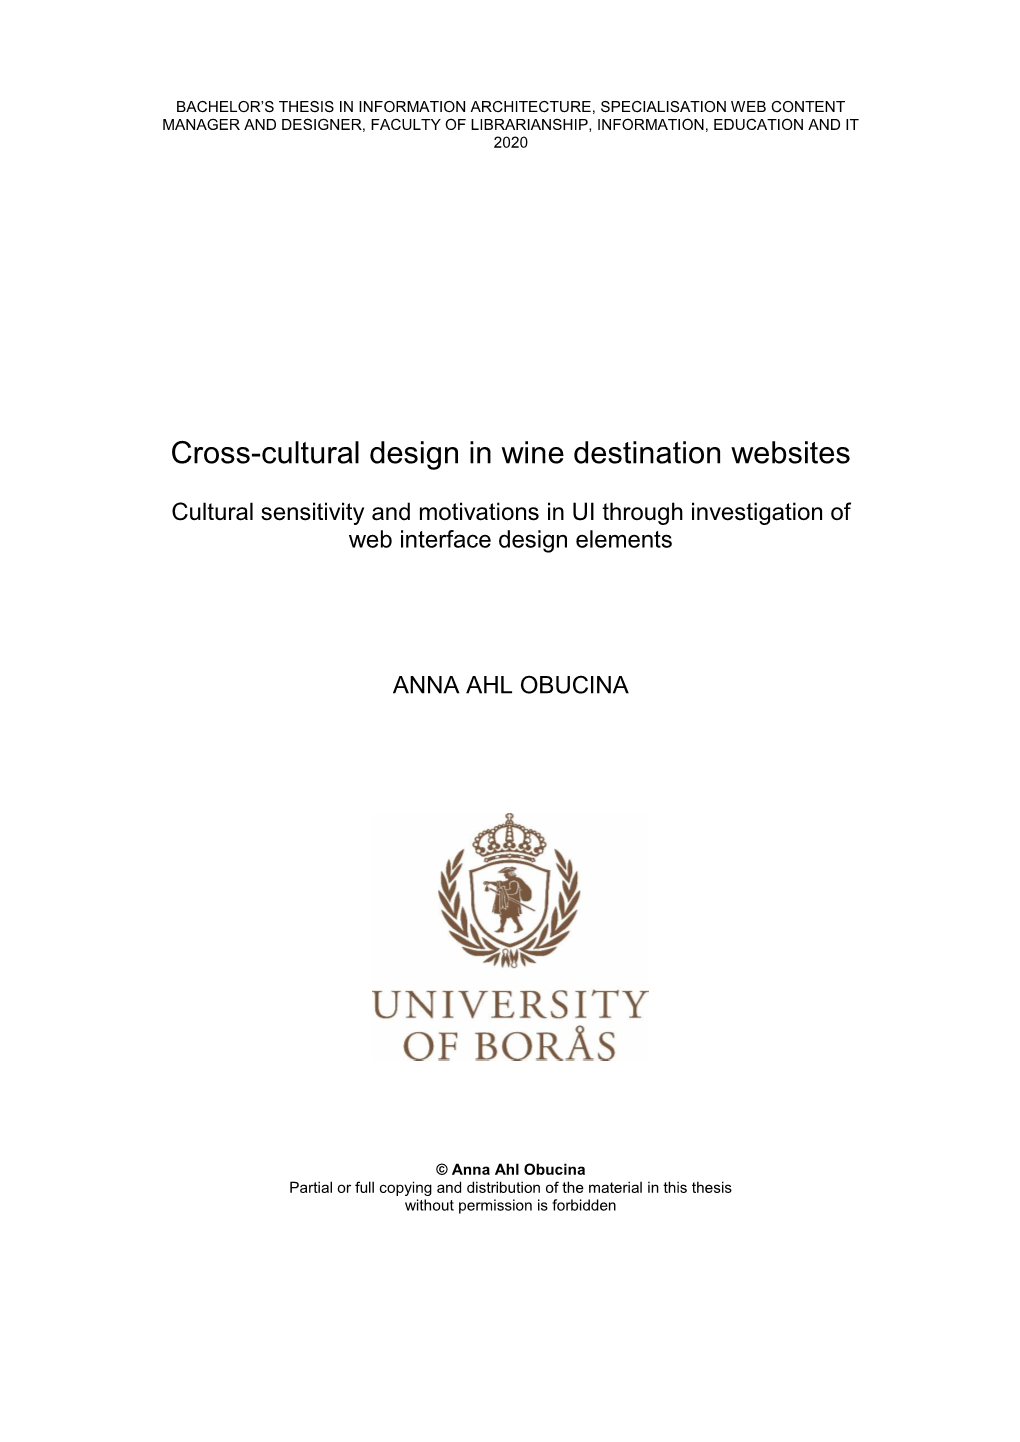 Cross-Cultural Design in Wine Destination Websites